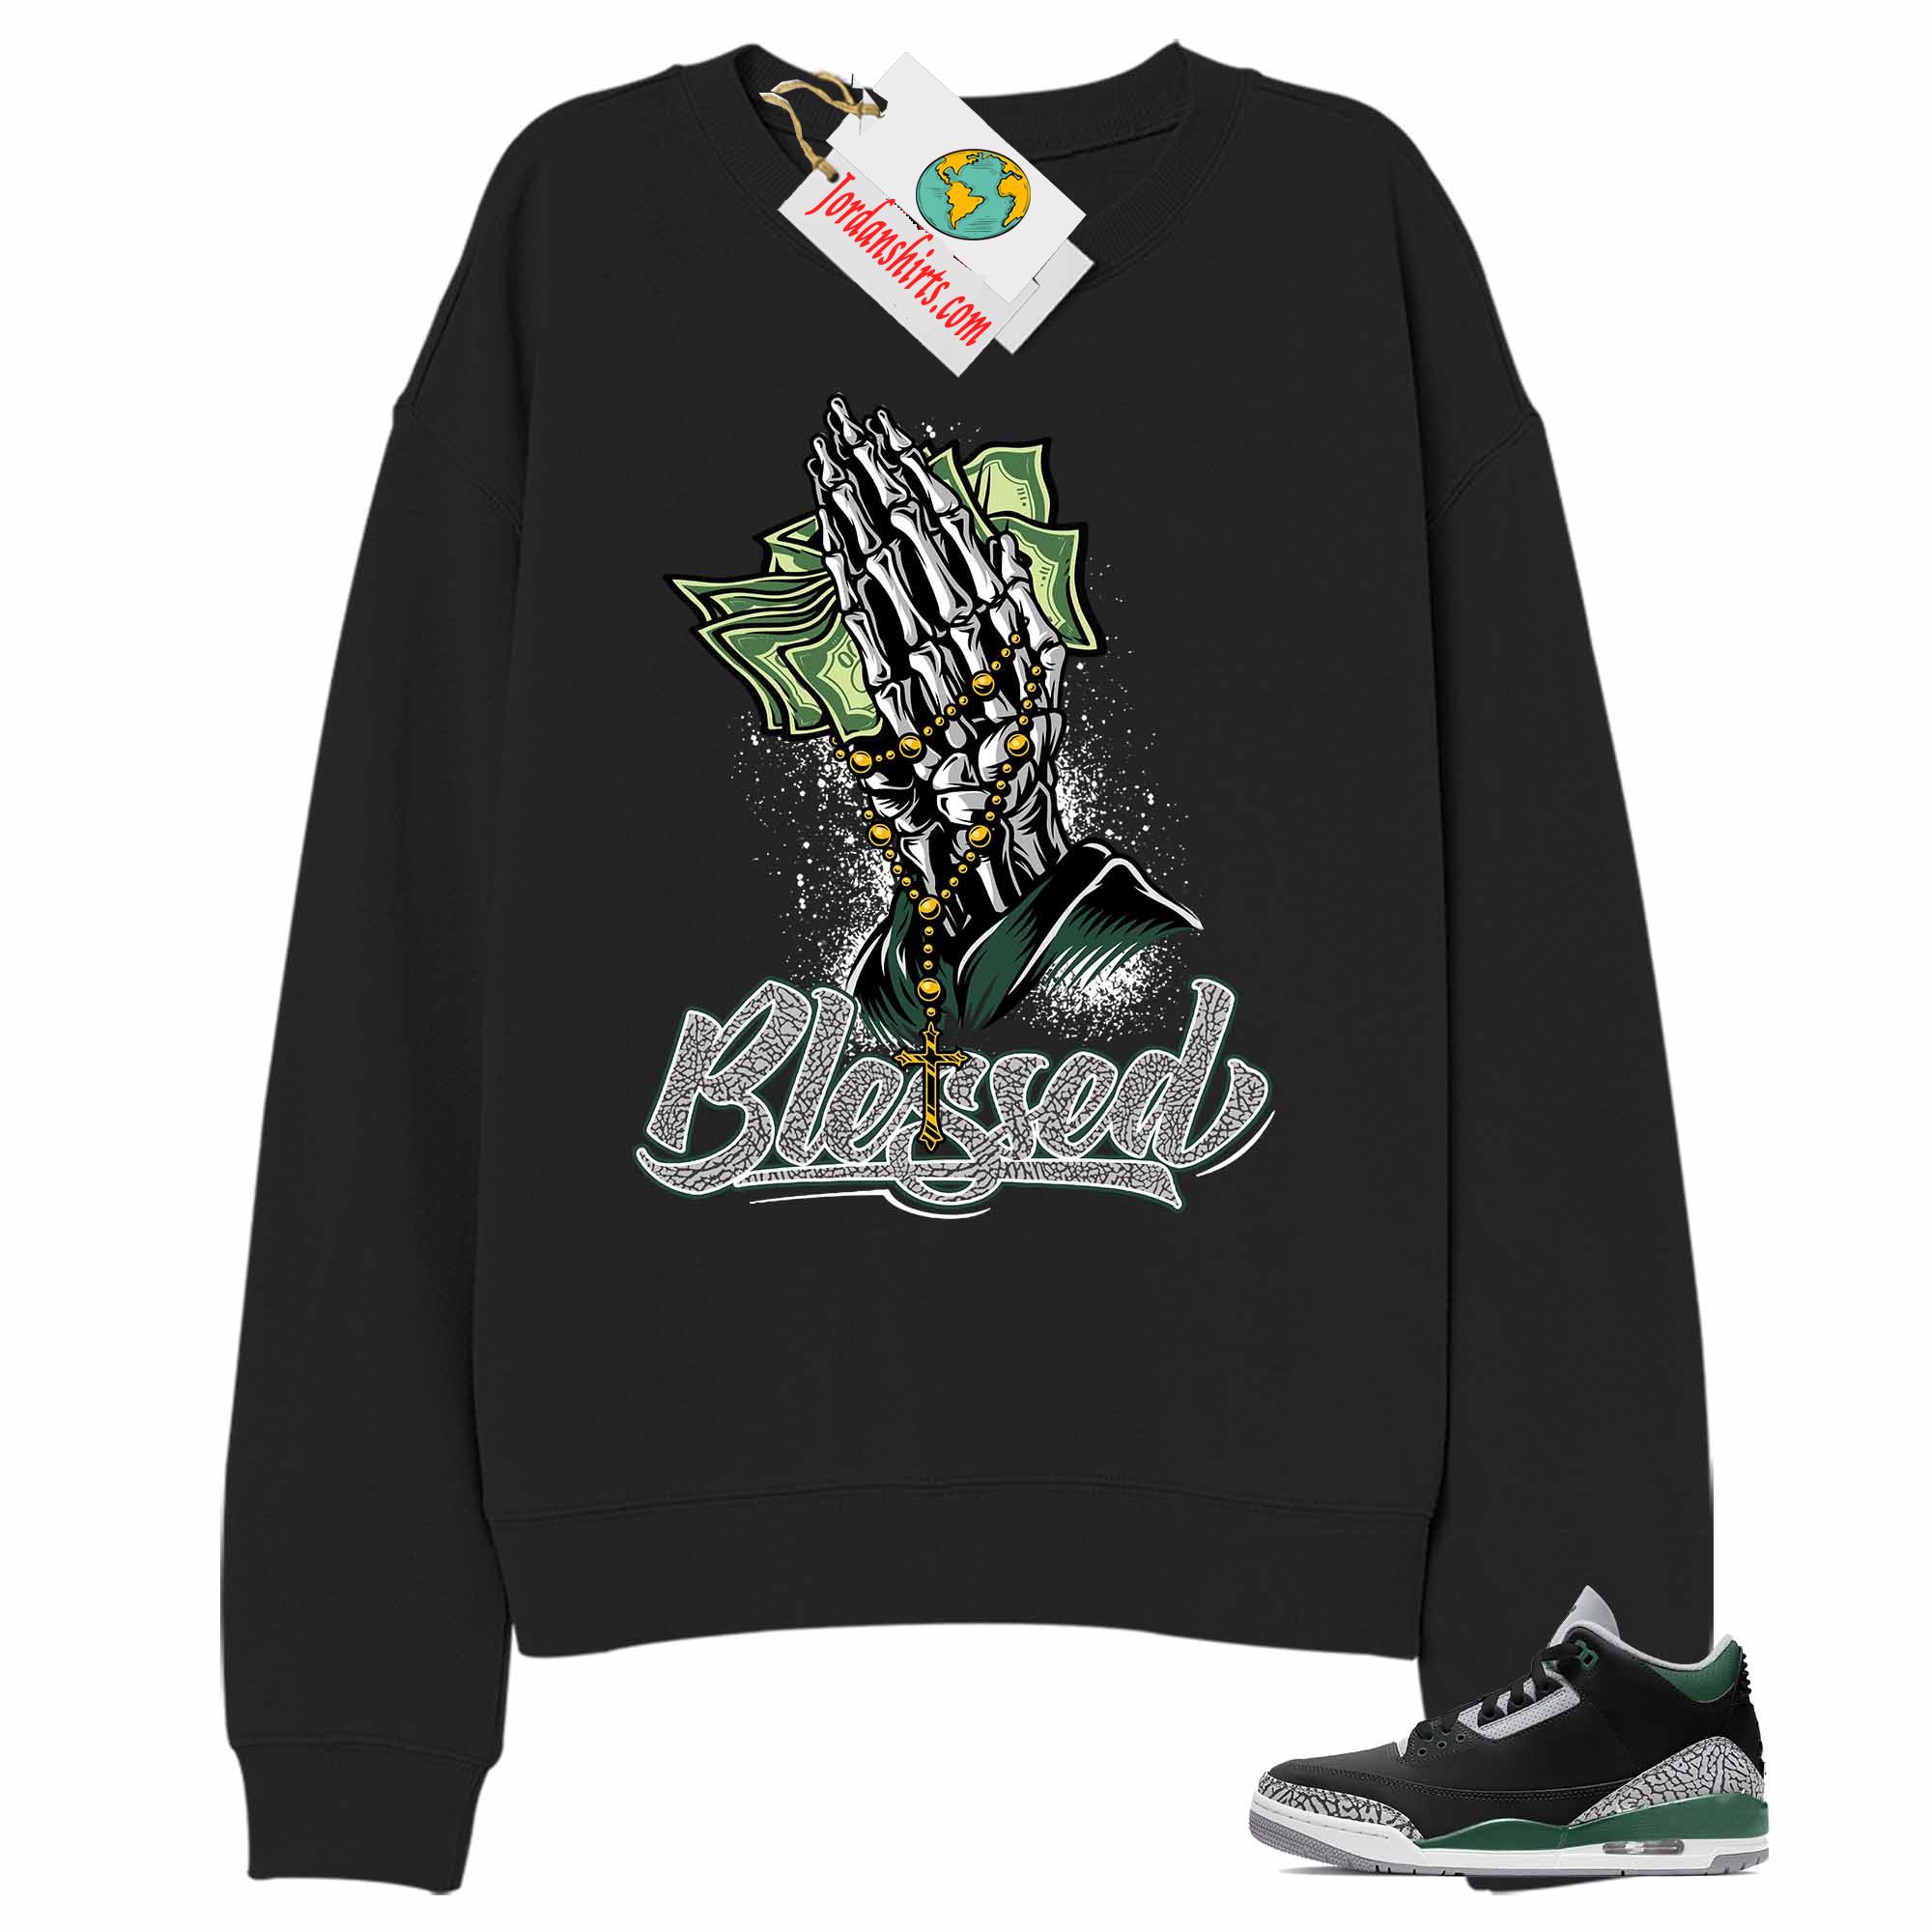 Jordan 3 Sweatshirt, Blessed Pray Hand Money Black Sweatshirt Air Jordan 3 Pine Green 3s Size Up To 5xl